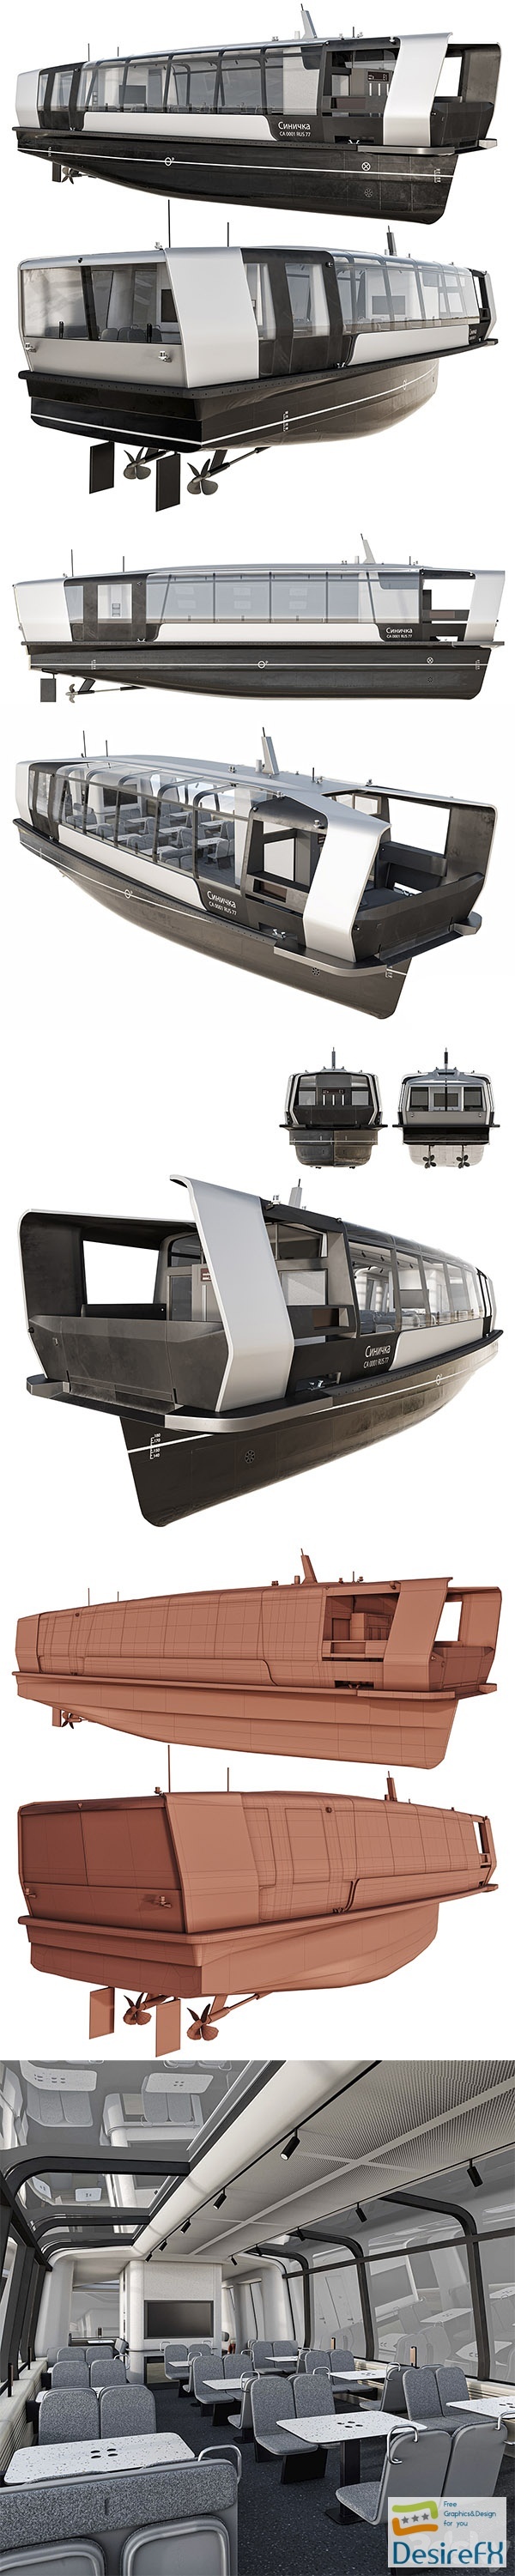 Electric River Tram 3D Model